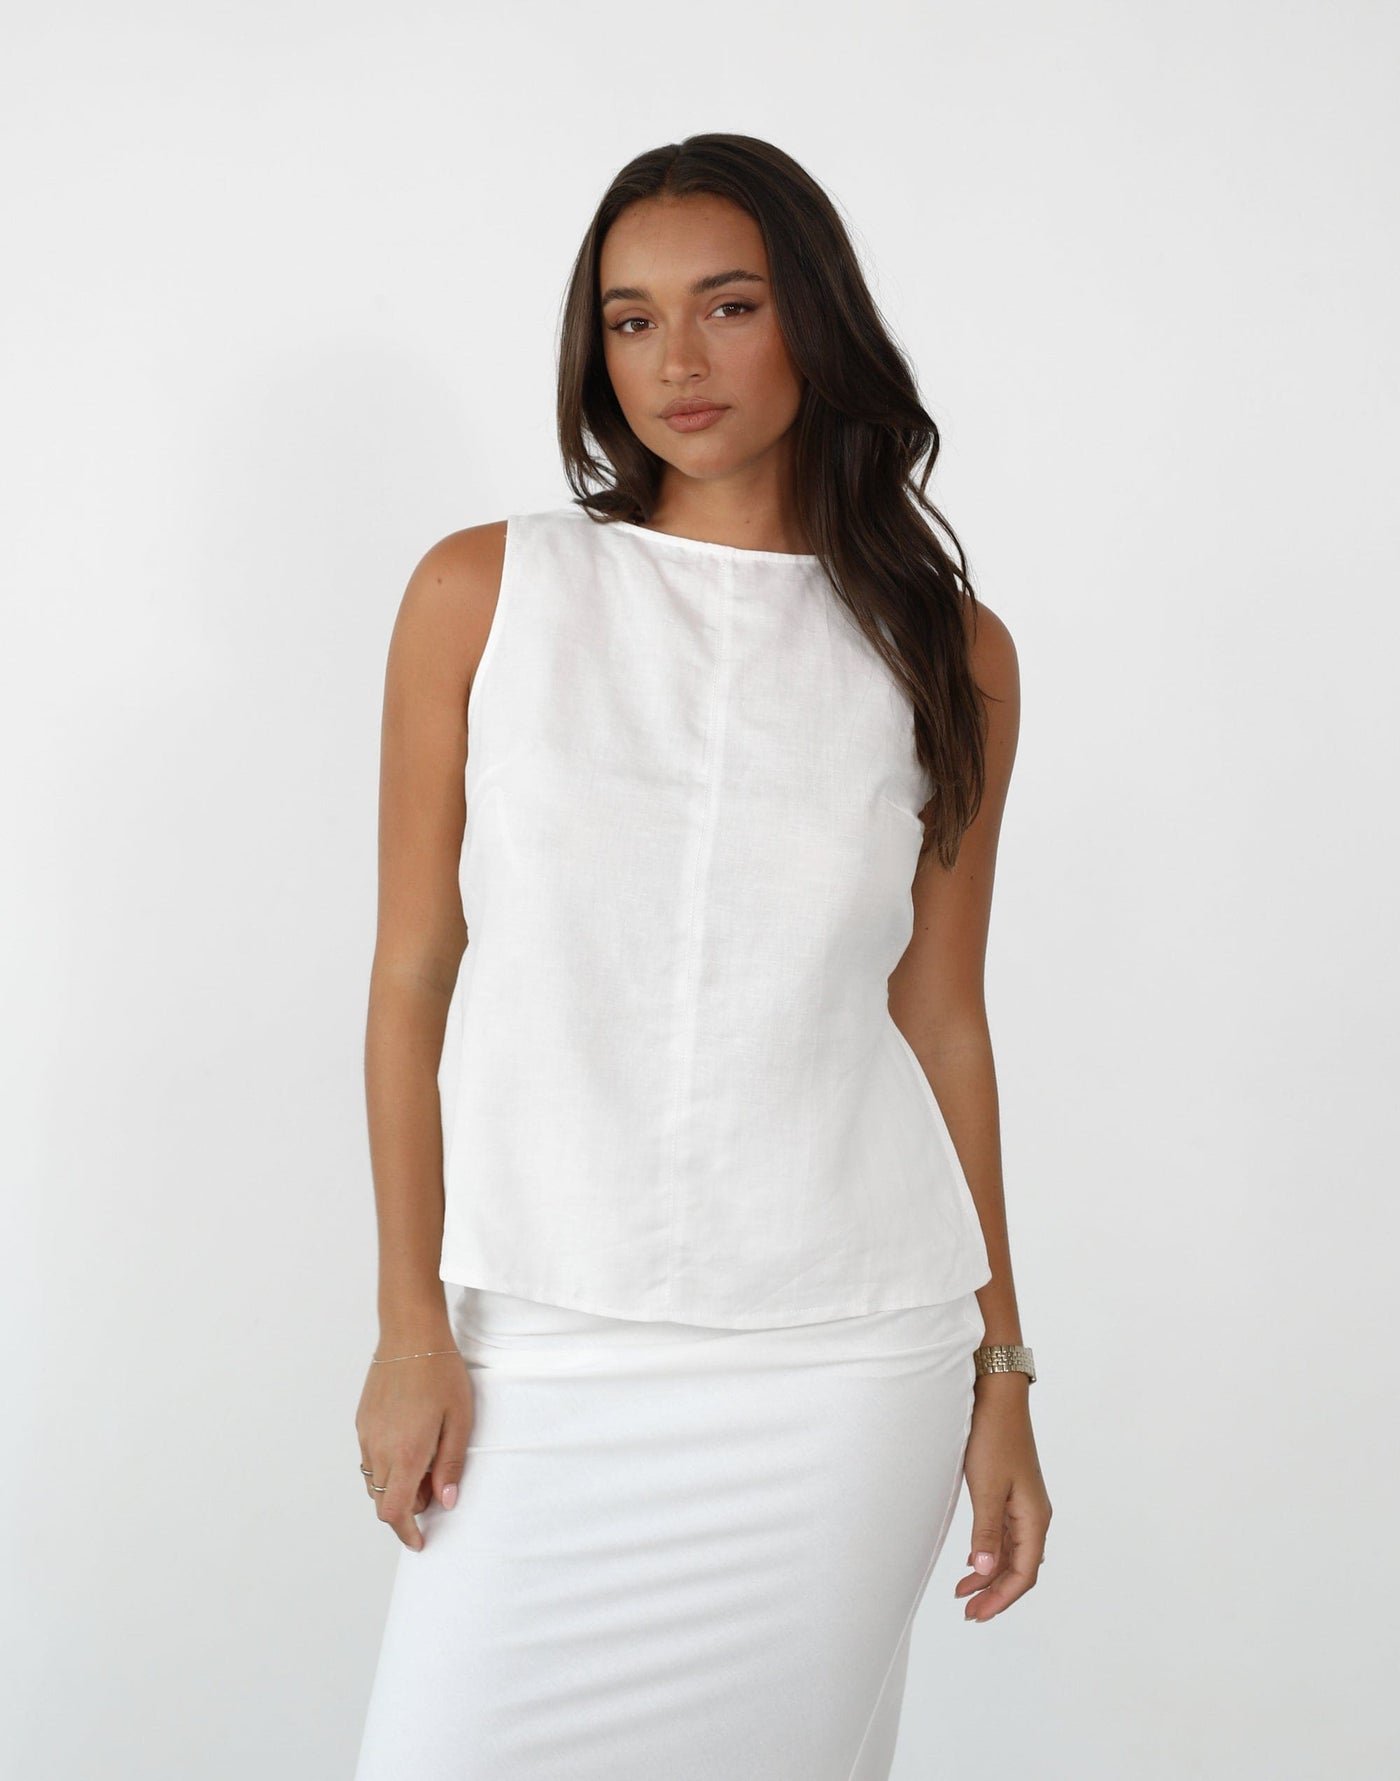 Lestari Top (White) - Linen Blend Top - Women's Top - Charcoal Clothing